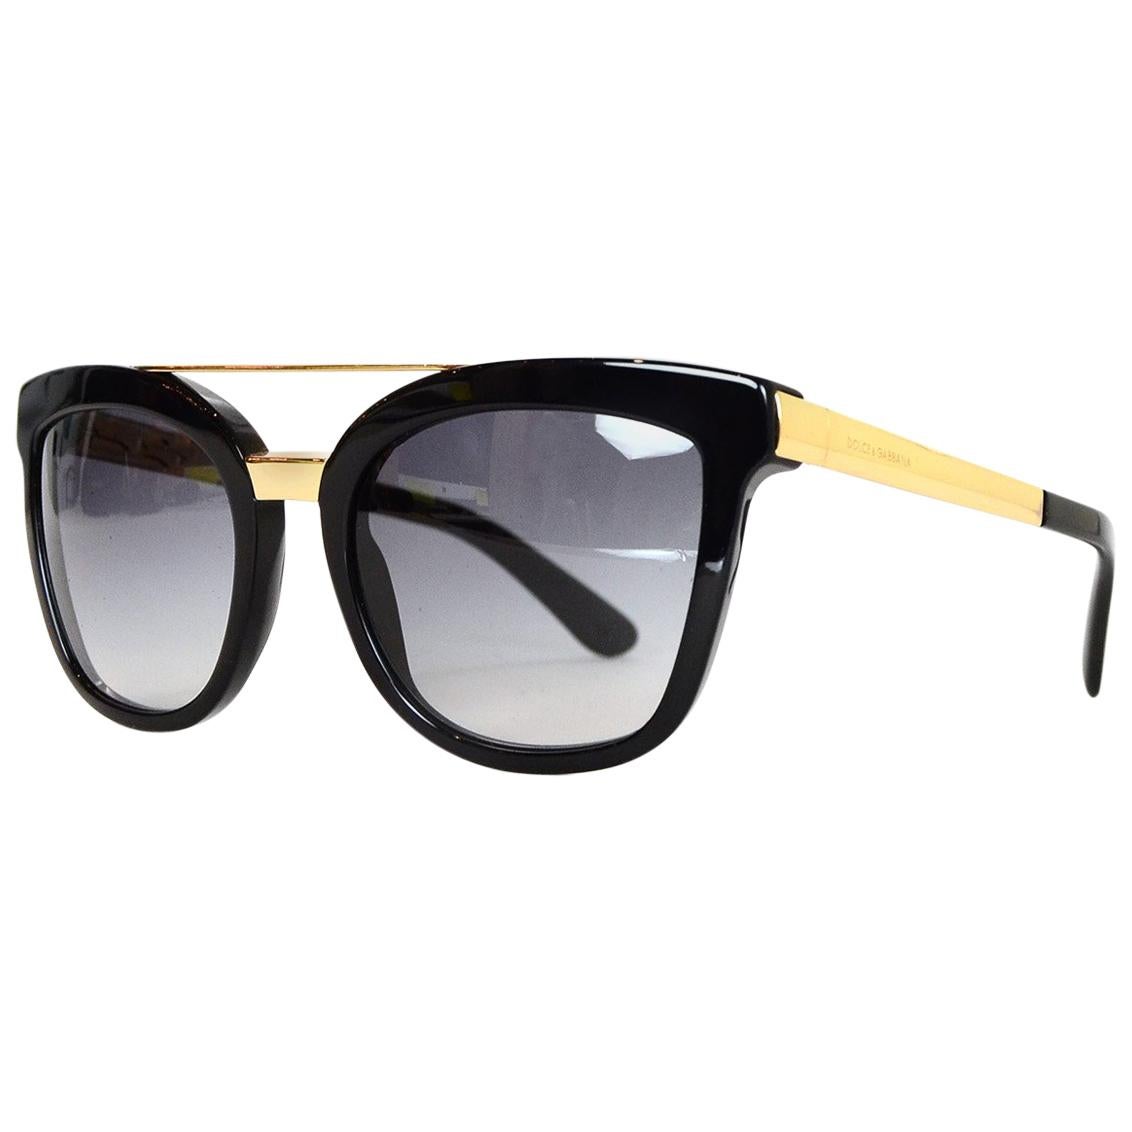 Dolce & Gabbana DG 4269 Black Resin Sunglasses w/ Top Goldtone Bar